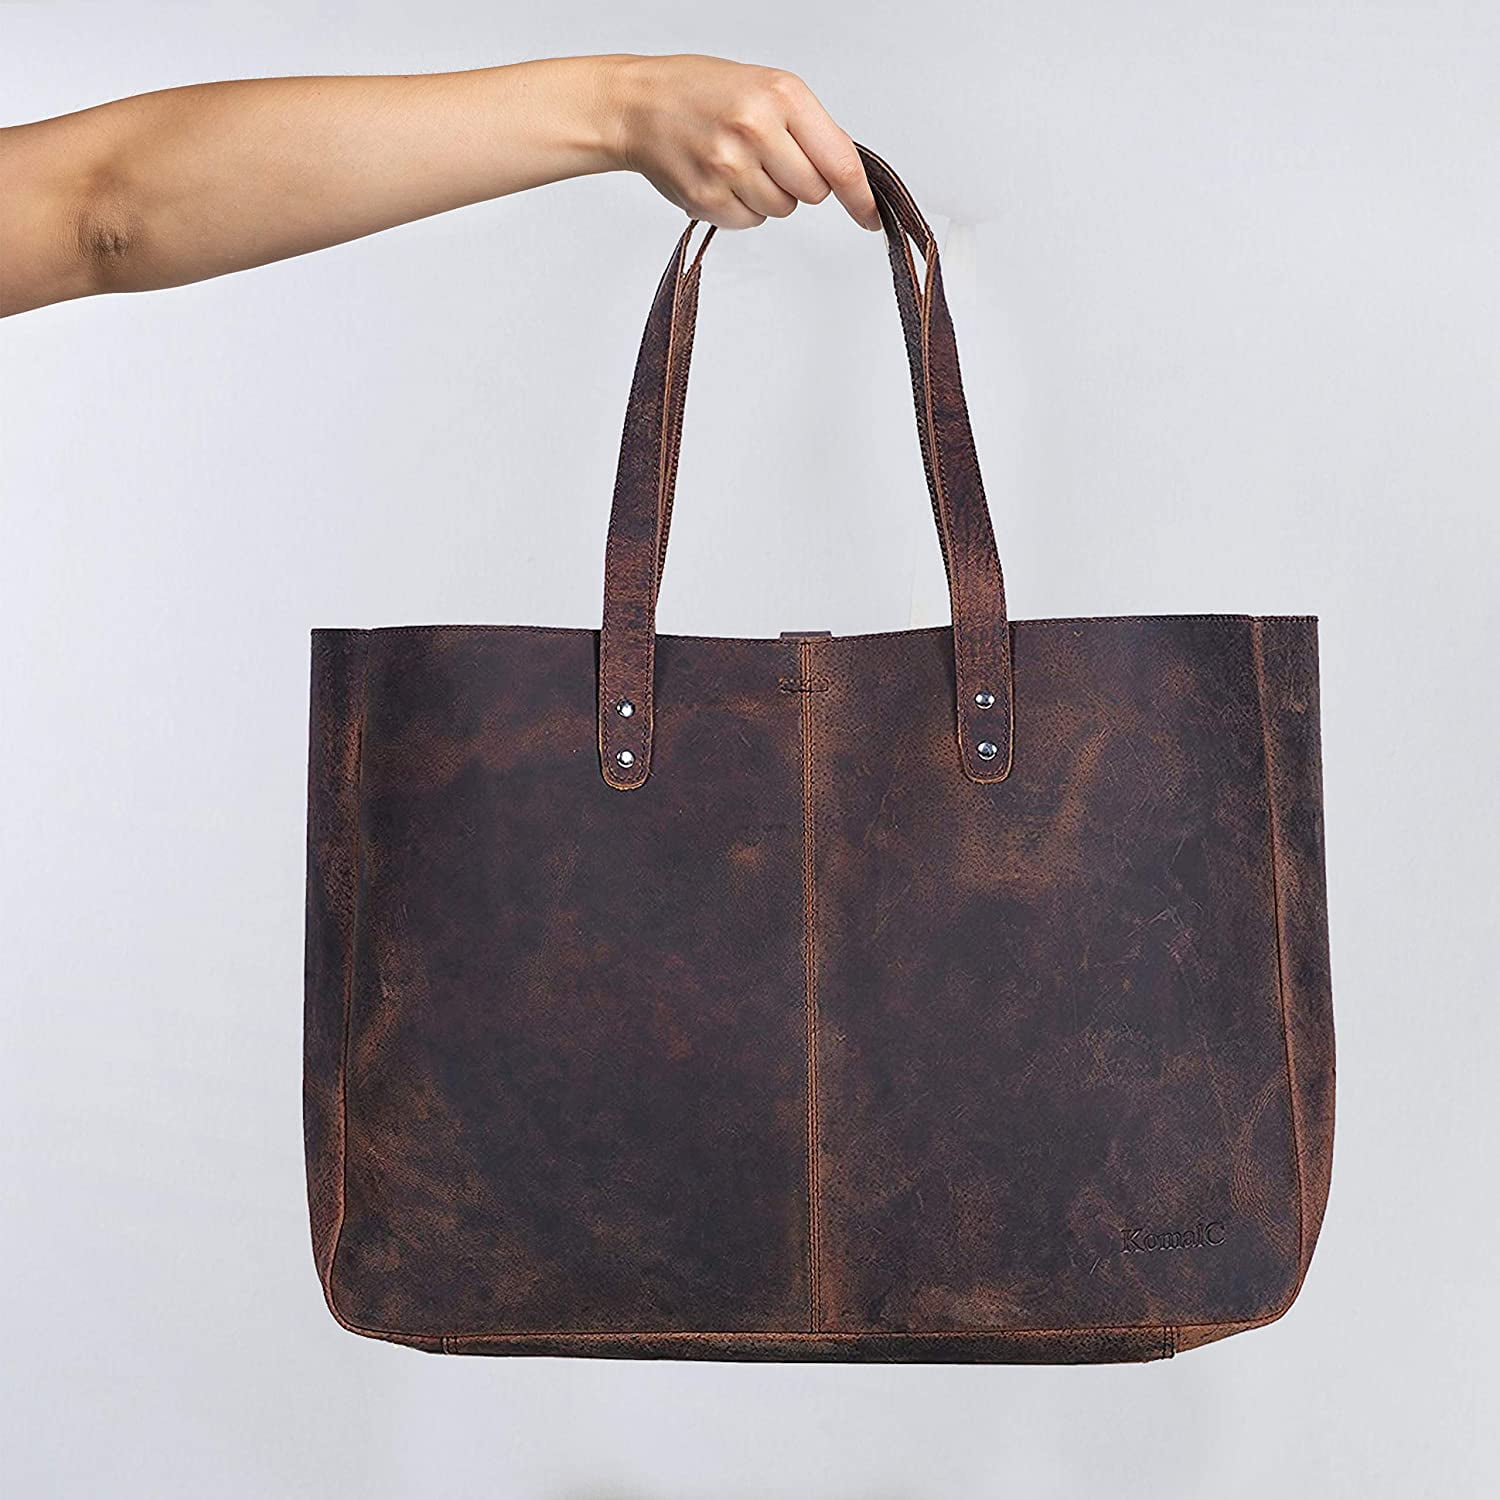 Women Bag Fashion Handbag Shoulder Messenger Satchel Ladies Travel Shopping Tote